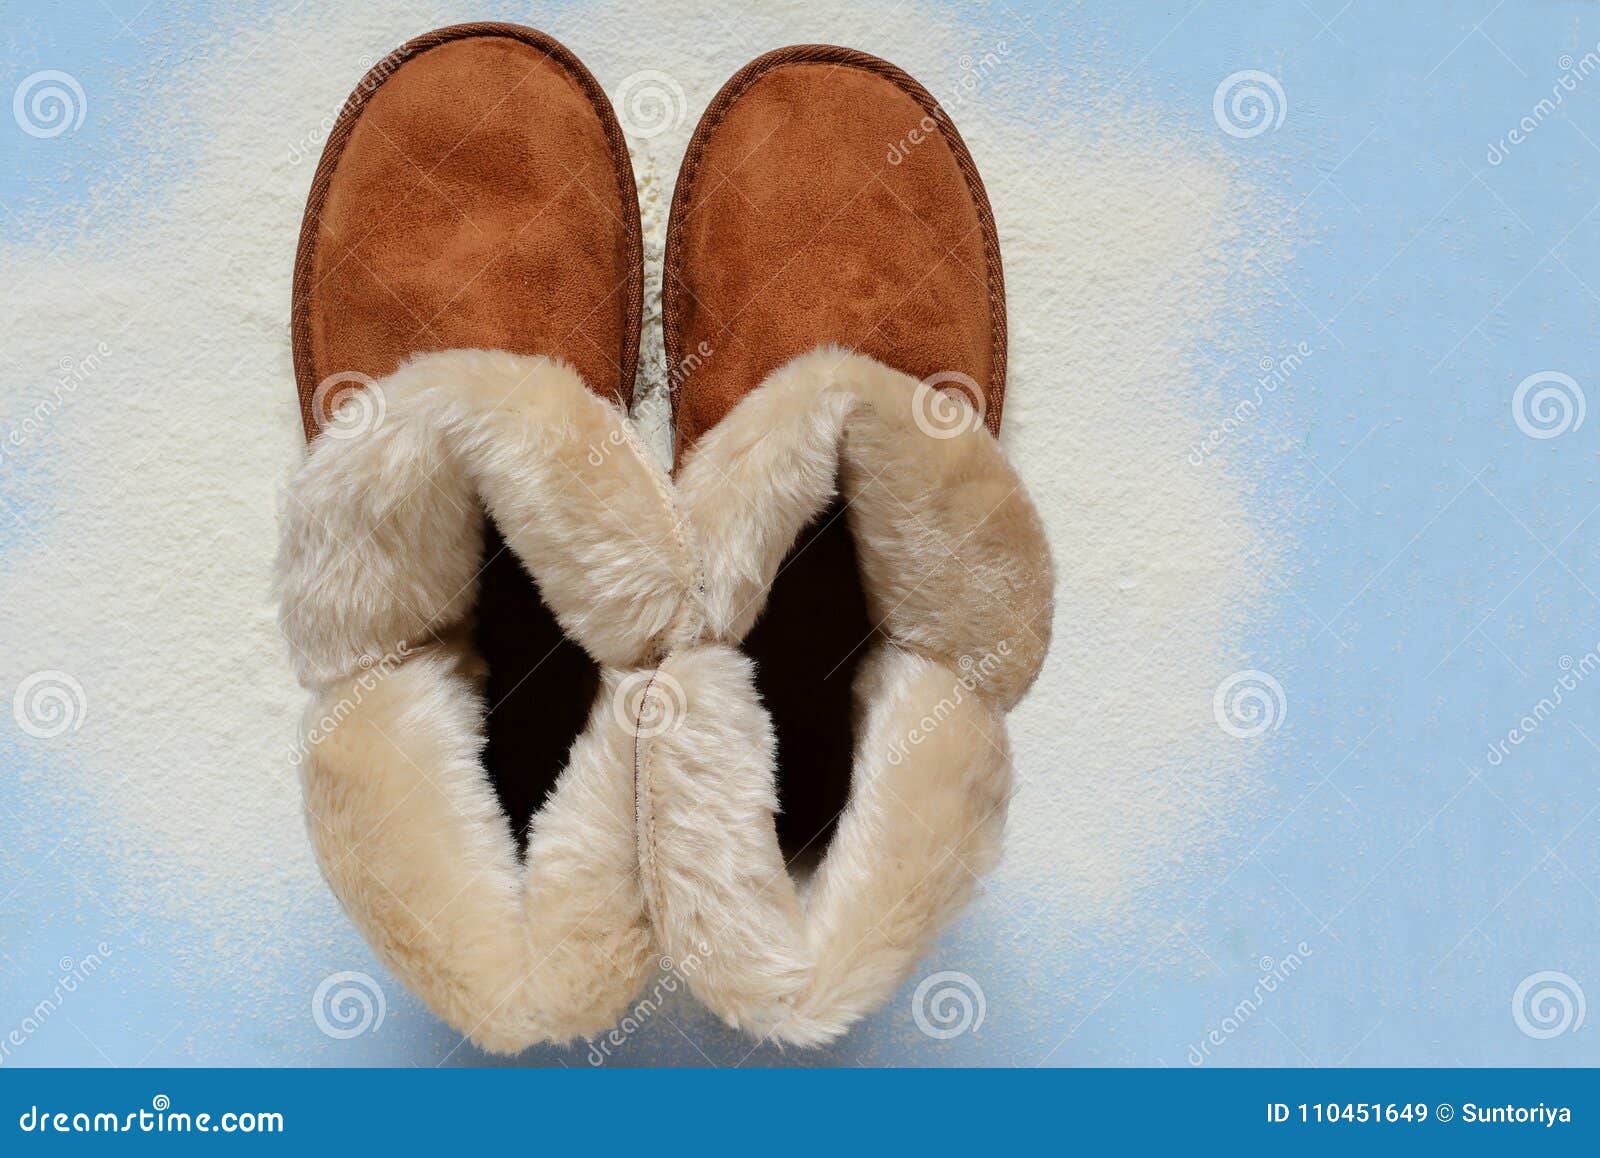 ugg women's sheepskin boots